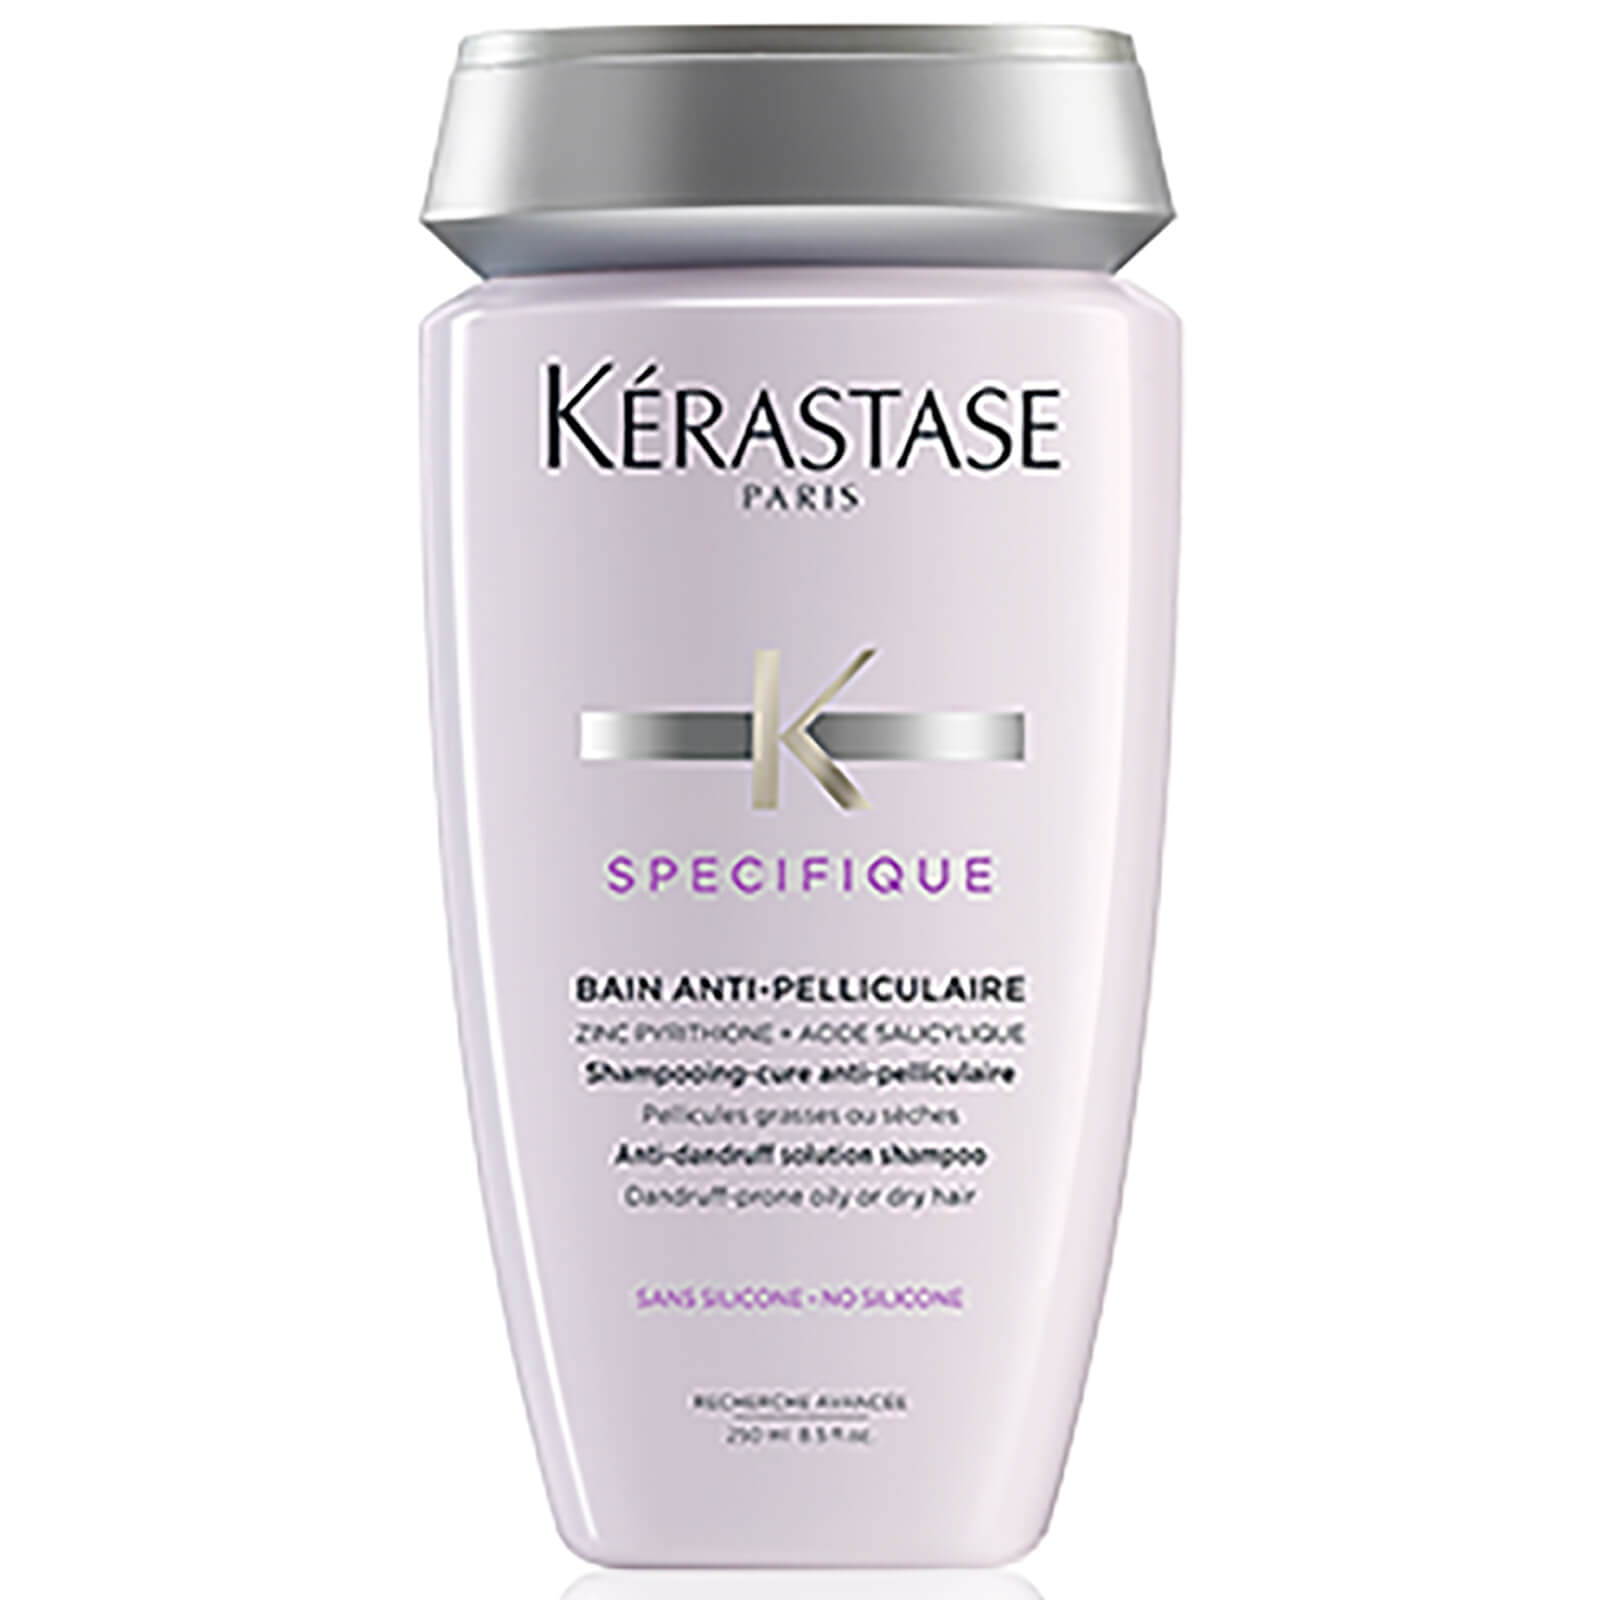 Image of Kérastase Specifique Bain Anti-Pelliculaire Shampoo 250 ml